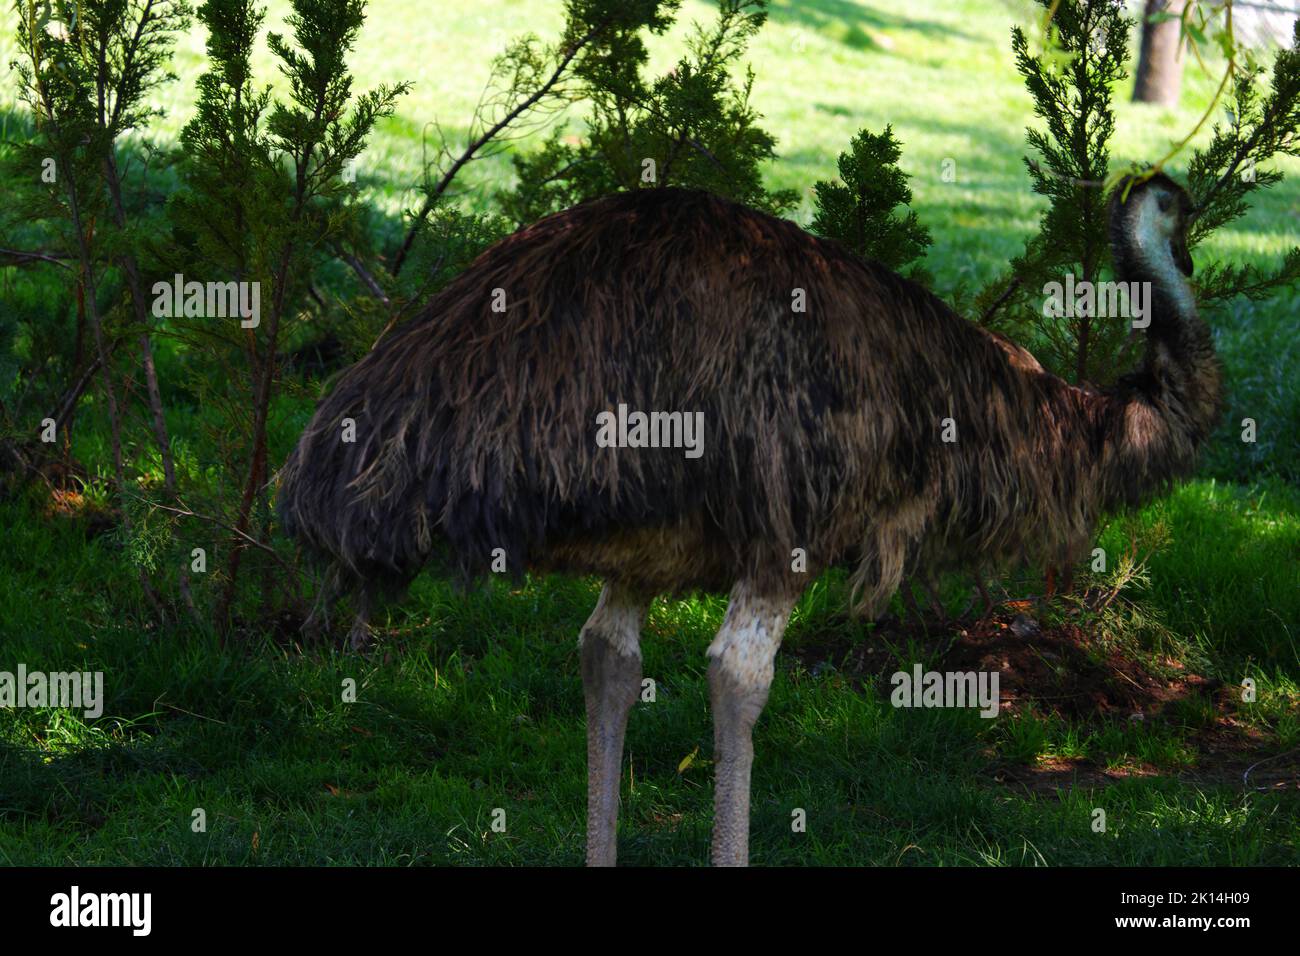 Emu on grass Stock Photo